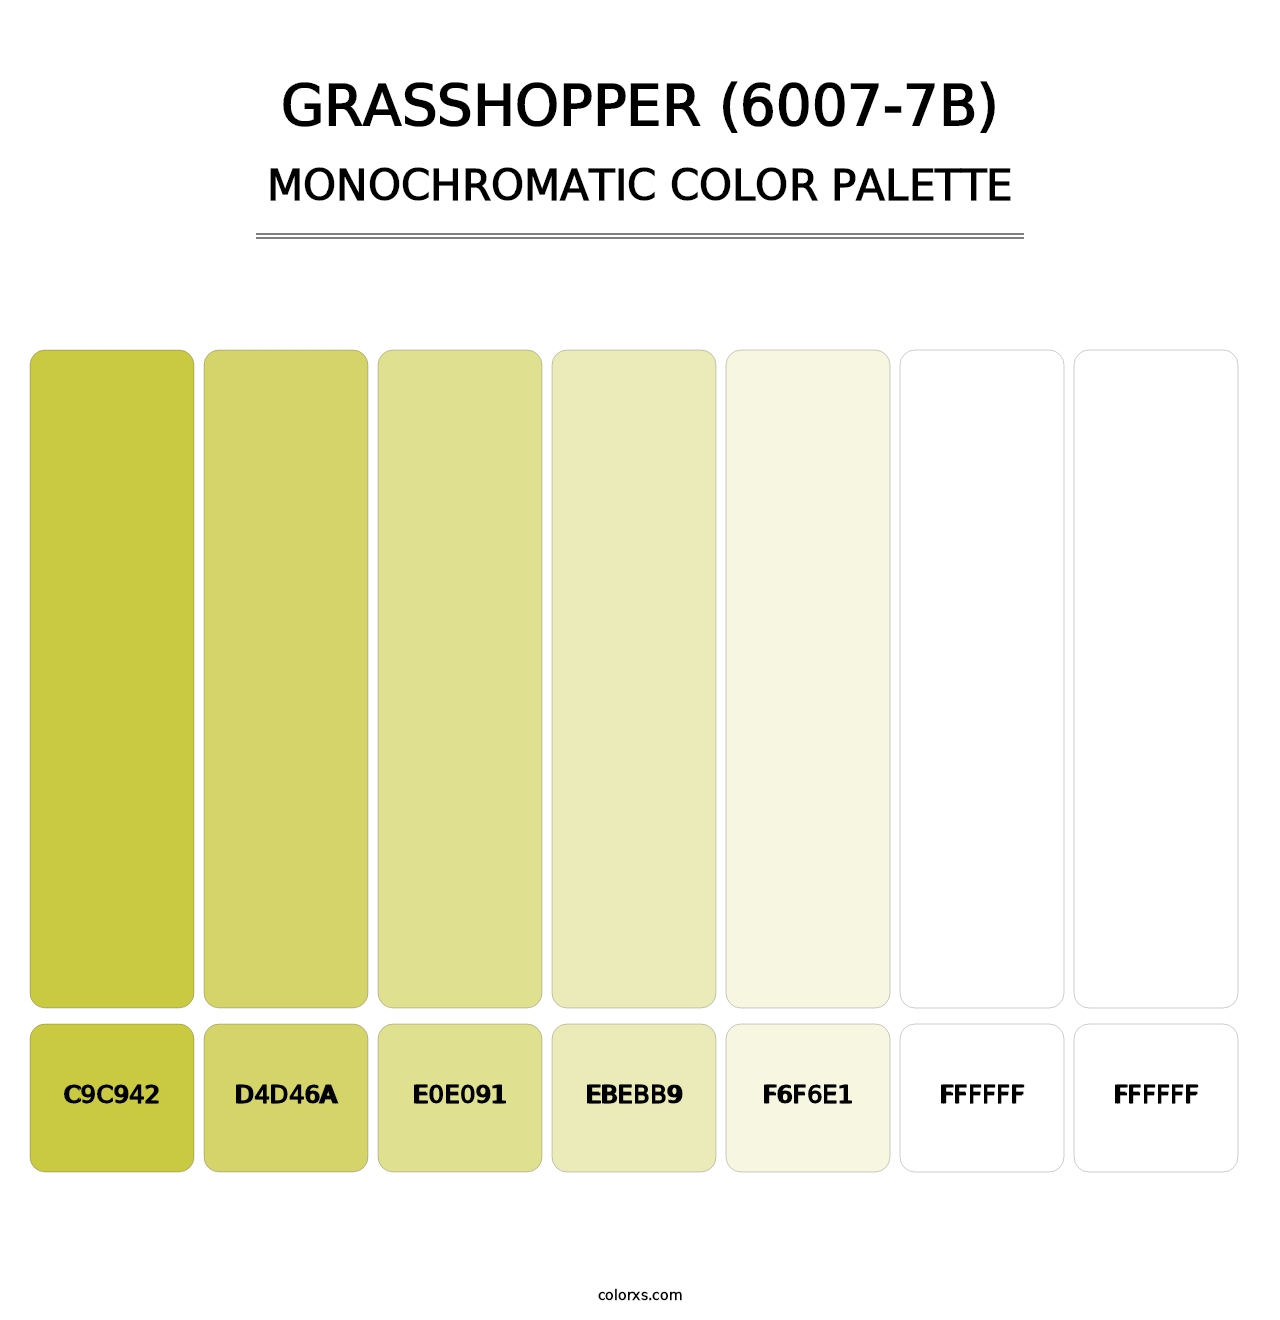 Grasshopper (6007-7B) - Monochromatic Color Palette